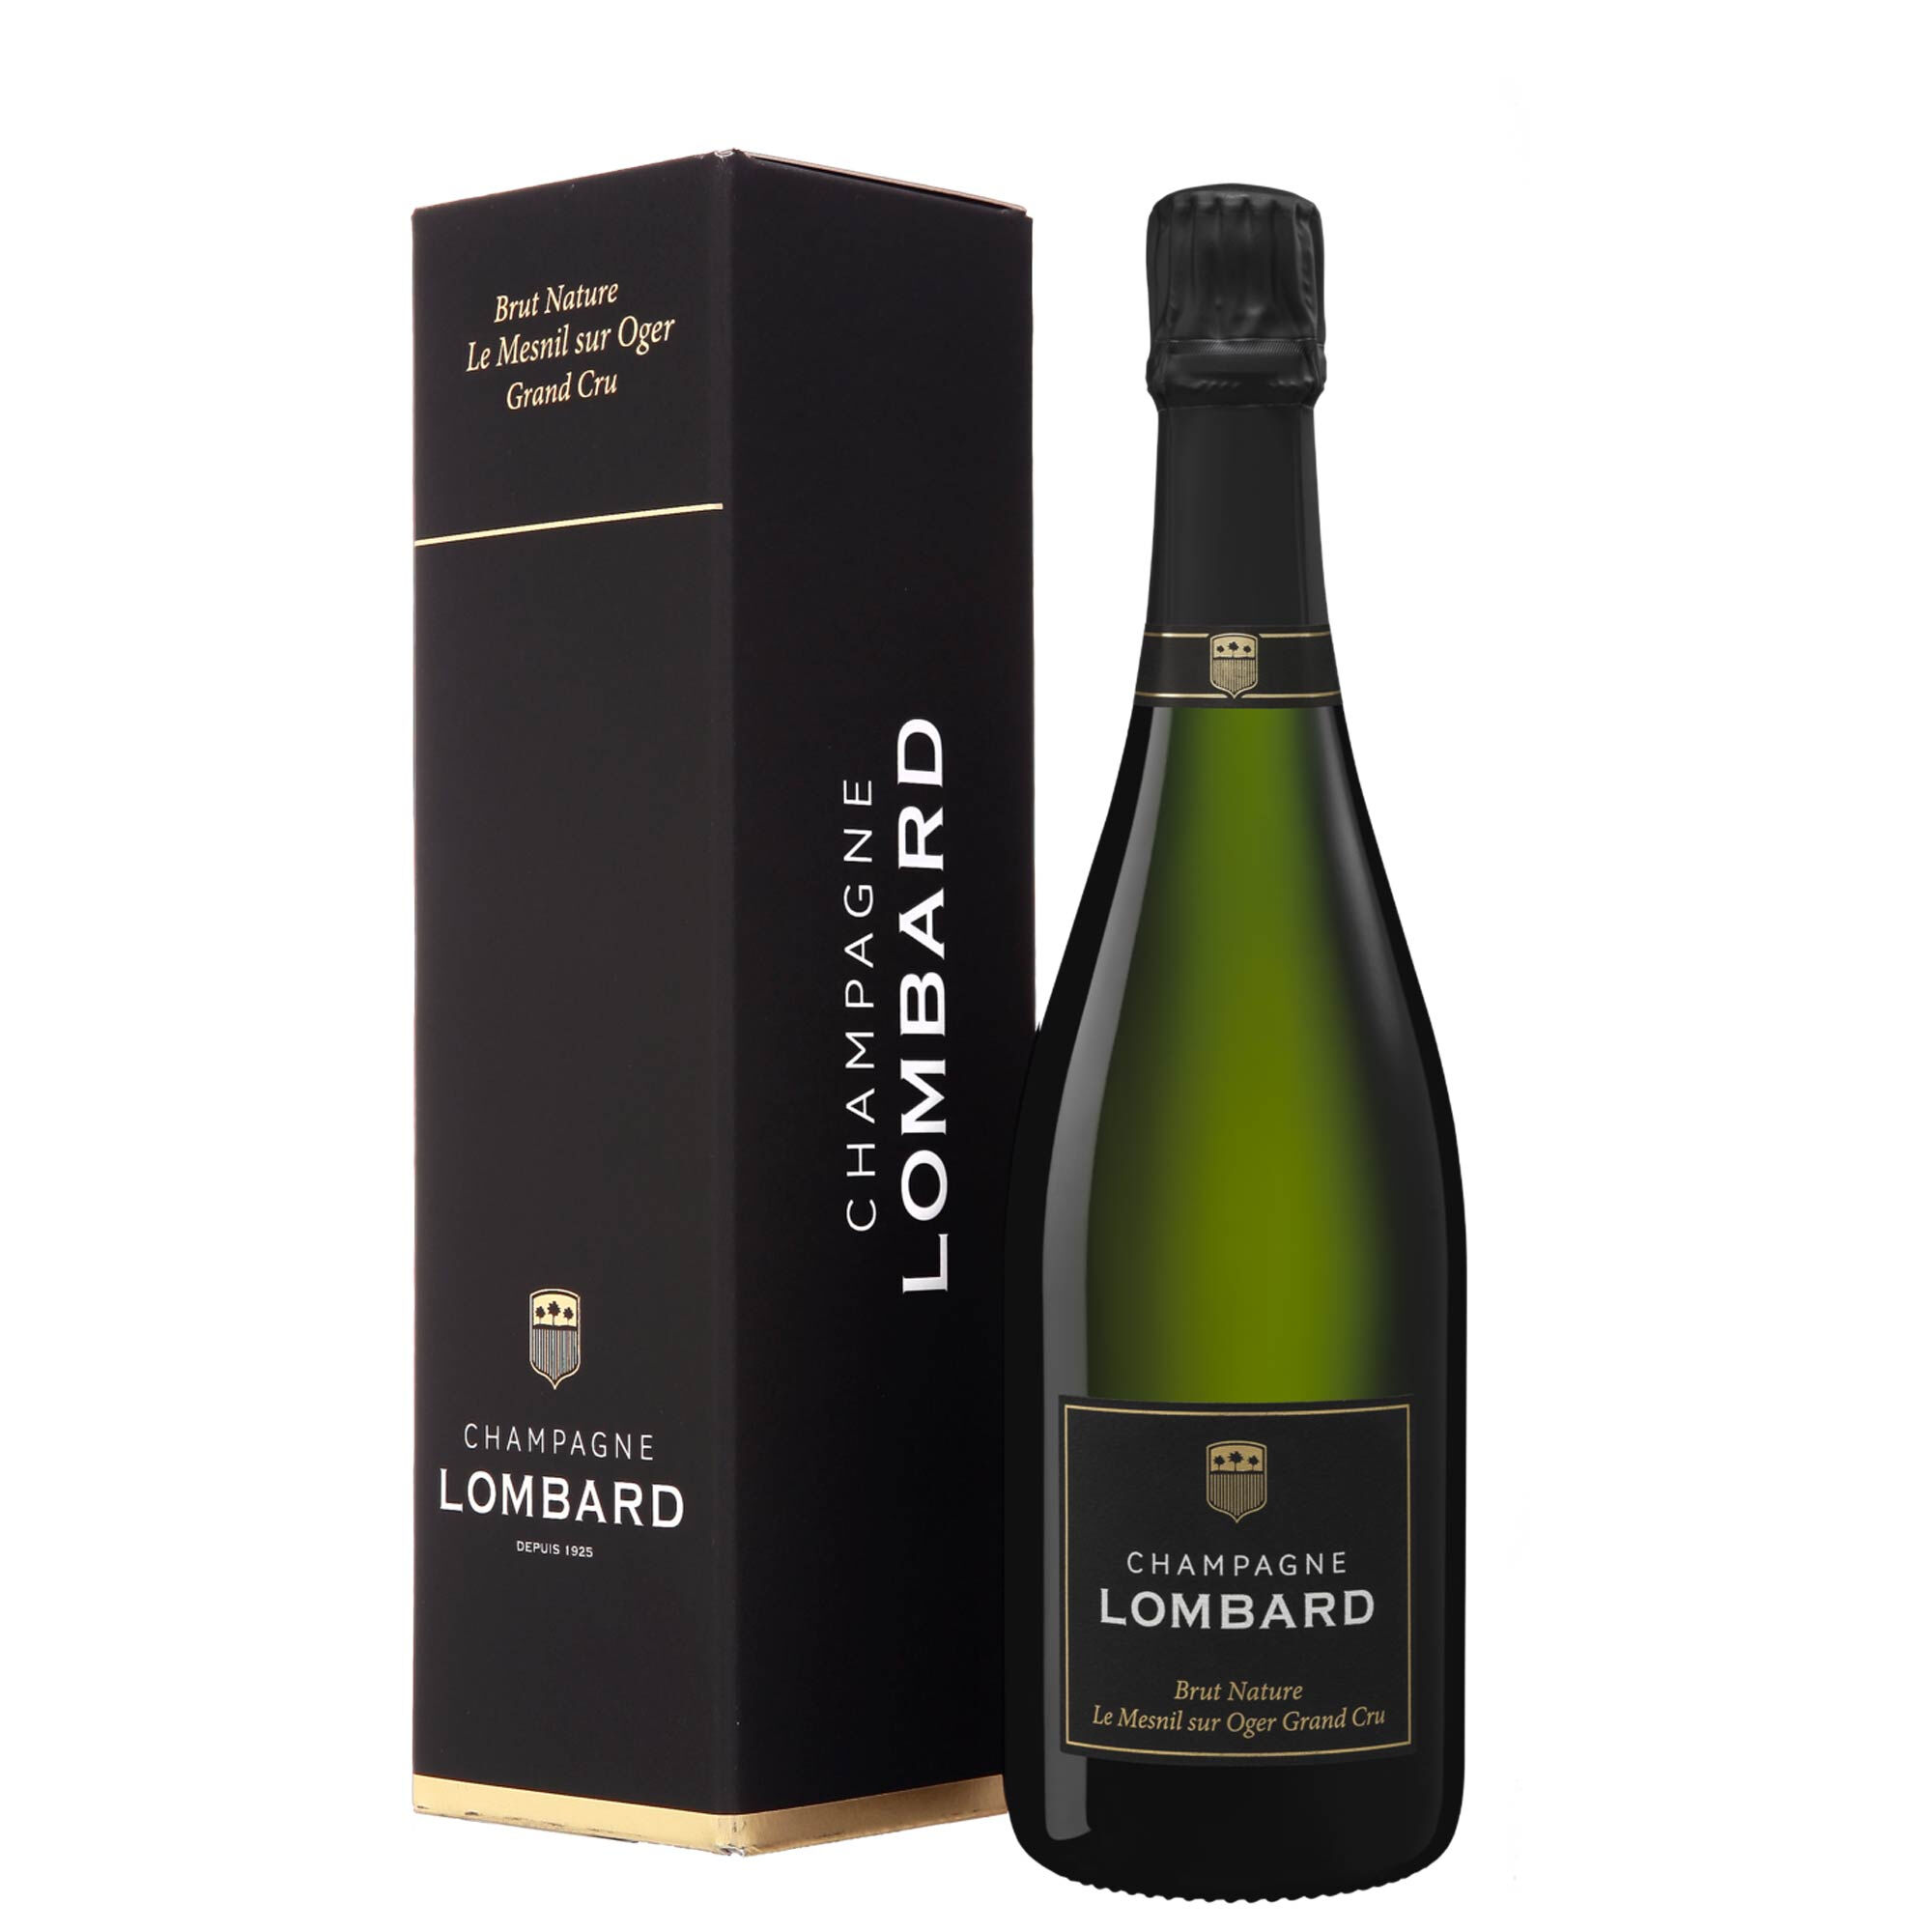 Champagne Lombard Champagne Brut Nature Grand Cru Le Mesnil Sur Oger 2015 – Lombard Astucciato